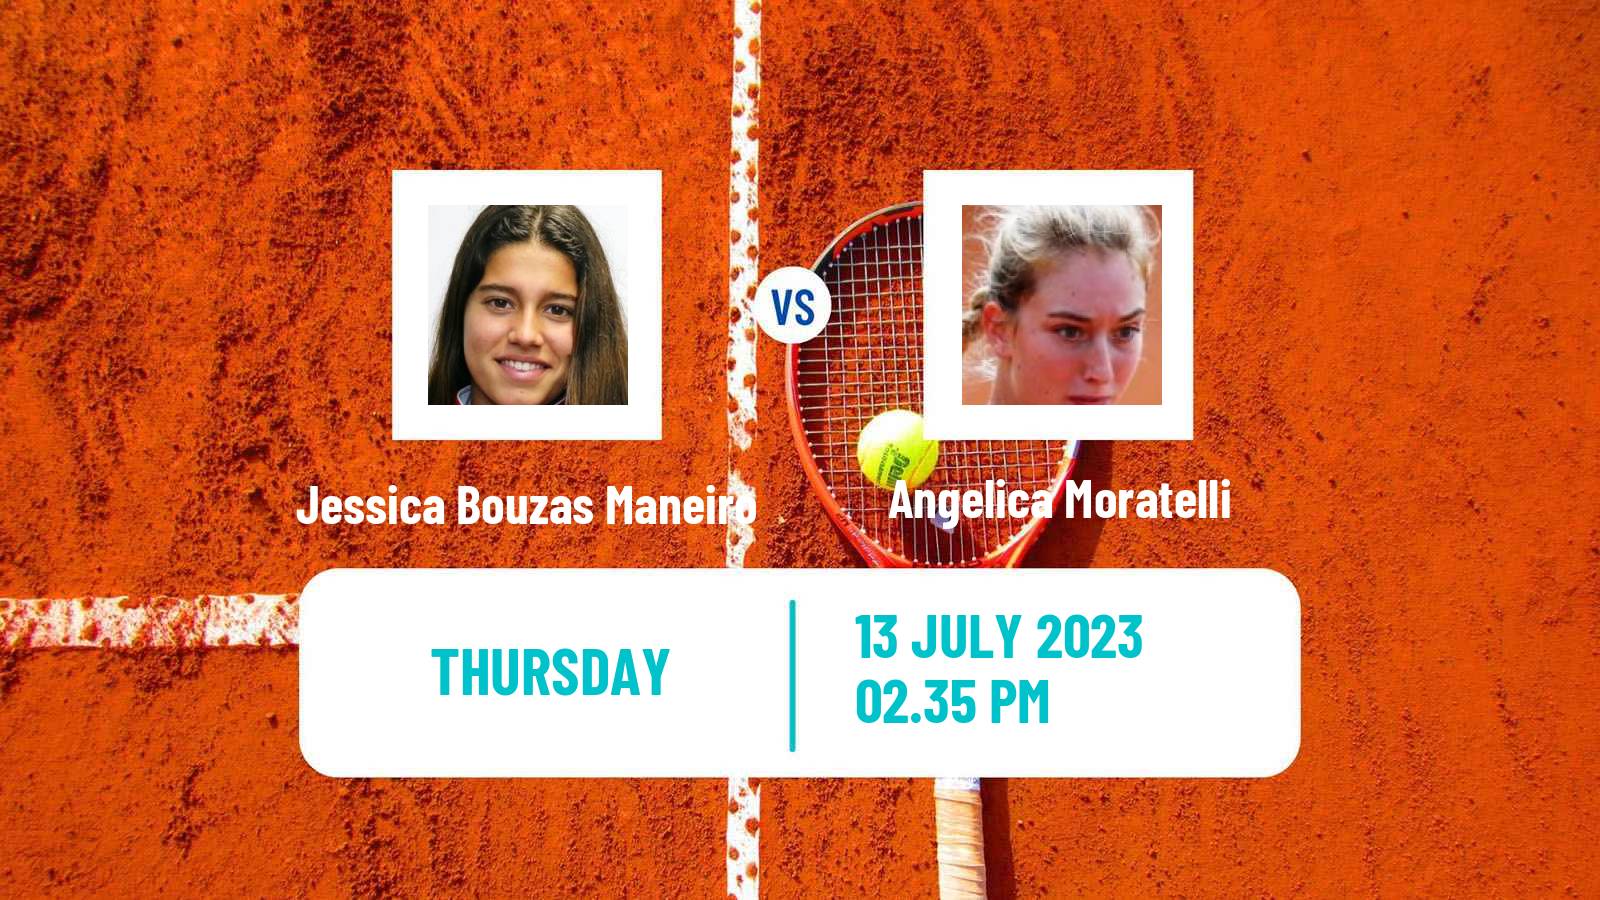 Tennis ITF W60 Rome 2 Women Jessica Bouzas Maneiro - Angelica Moratelli